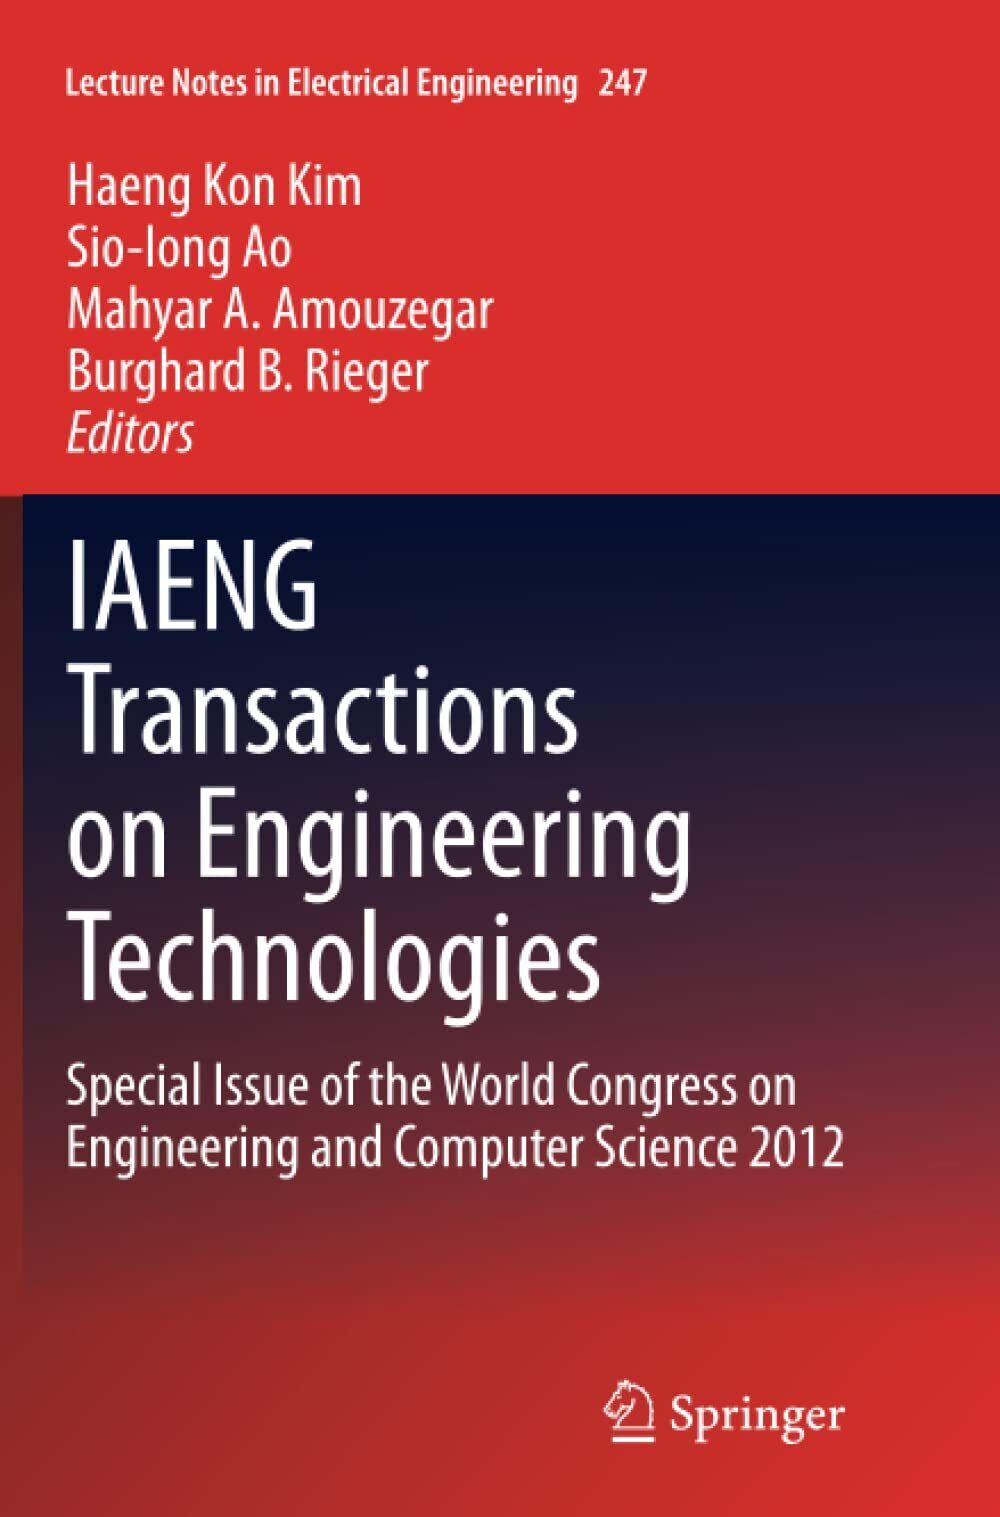 IAENG Transactions on Engineering Technologies - Haeng Kon Kim - Springer, 2016